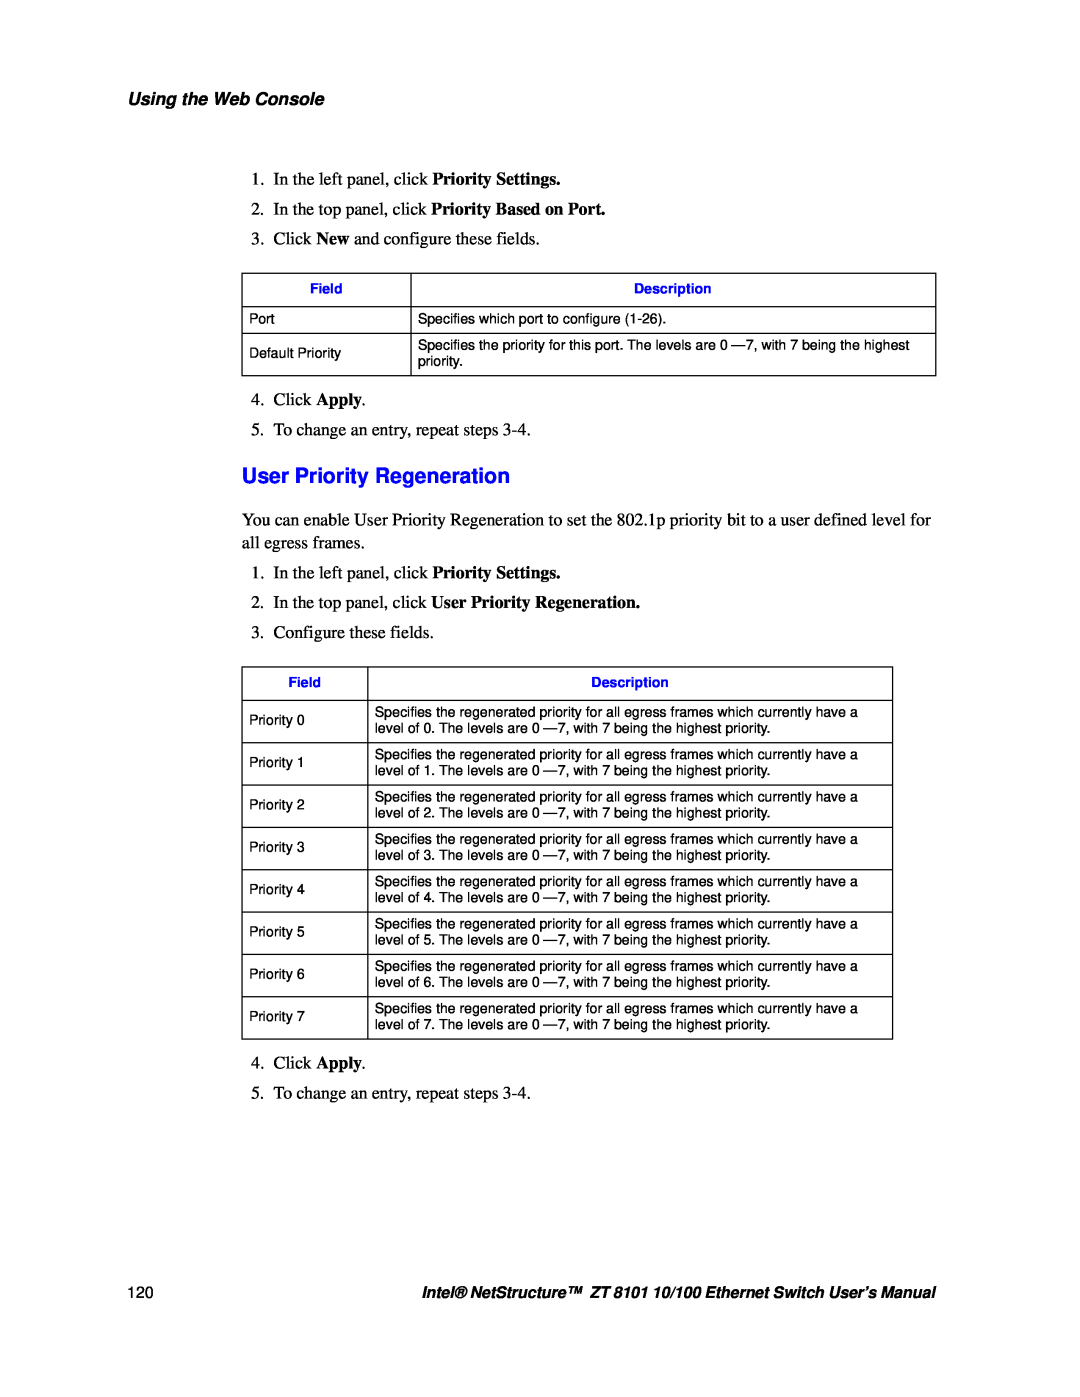 Intel ZT 8101 10/100 user manual User Priority Regeneration, Using the Web Console, Field, Description 